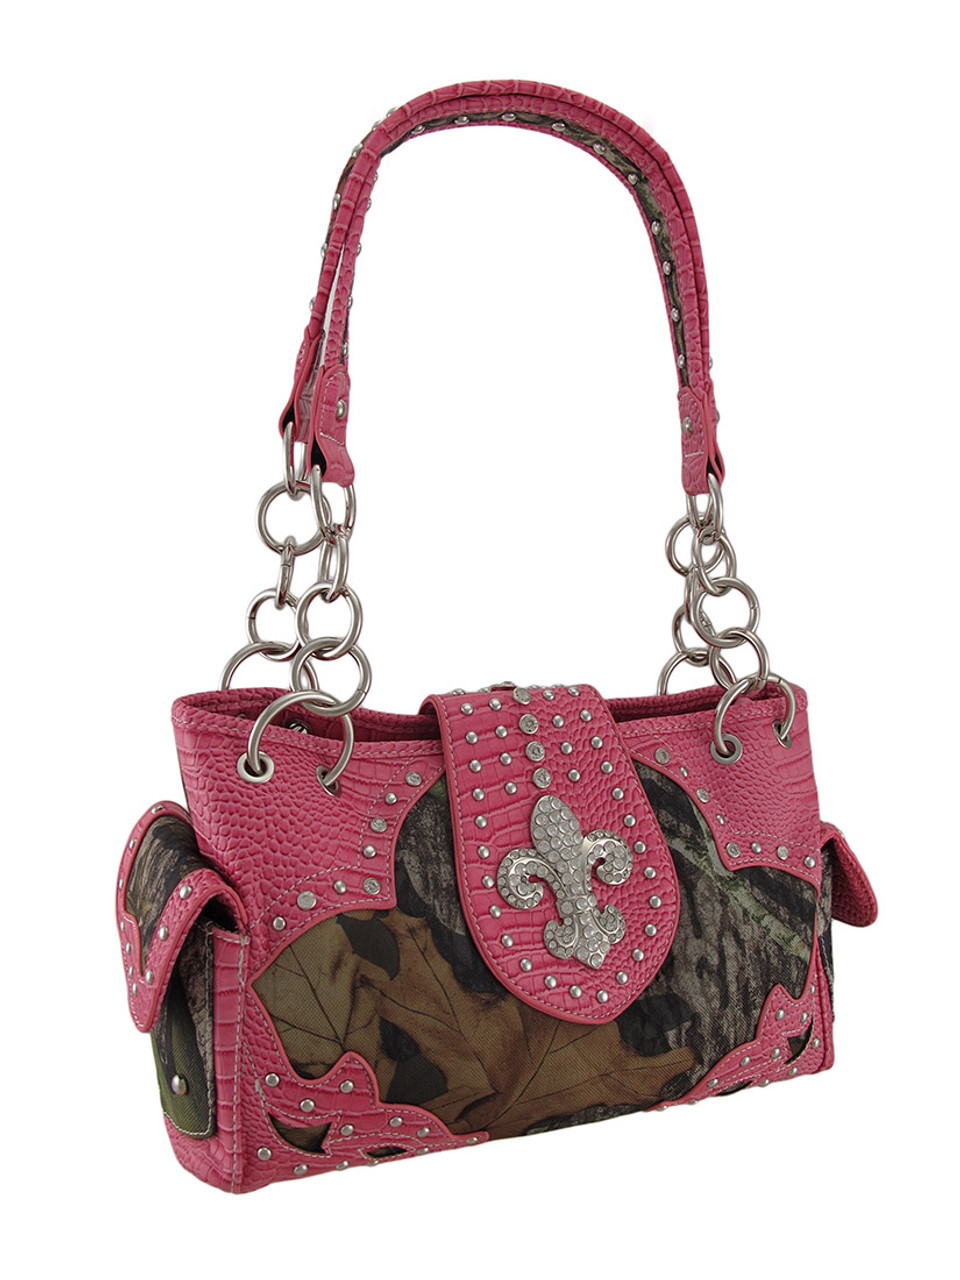 Dasein in Realtree Camouflage Camo Purse Studded Shoulder Bag Handbag with  Rhinestone | Satchel bags, Bags, Shoulder bag